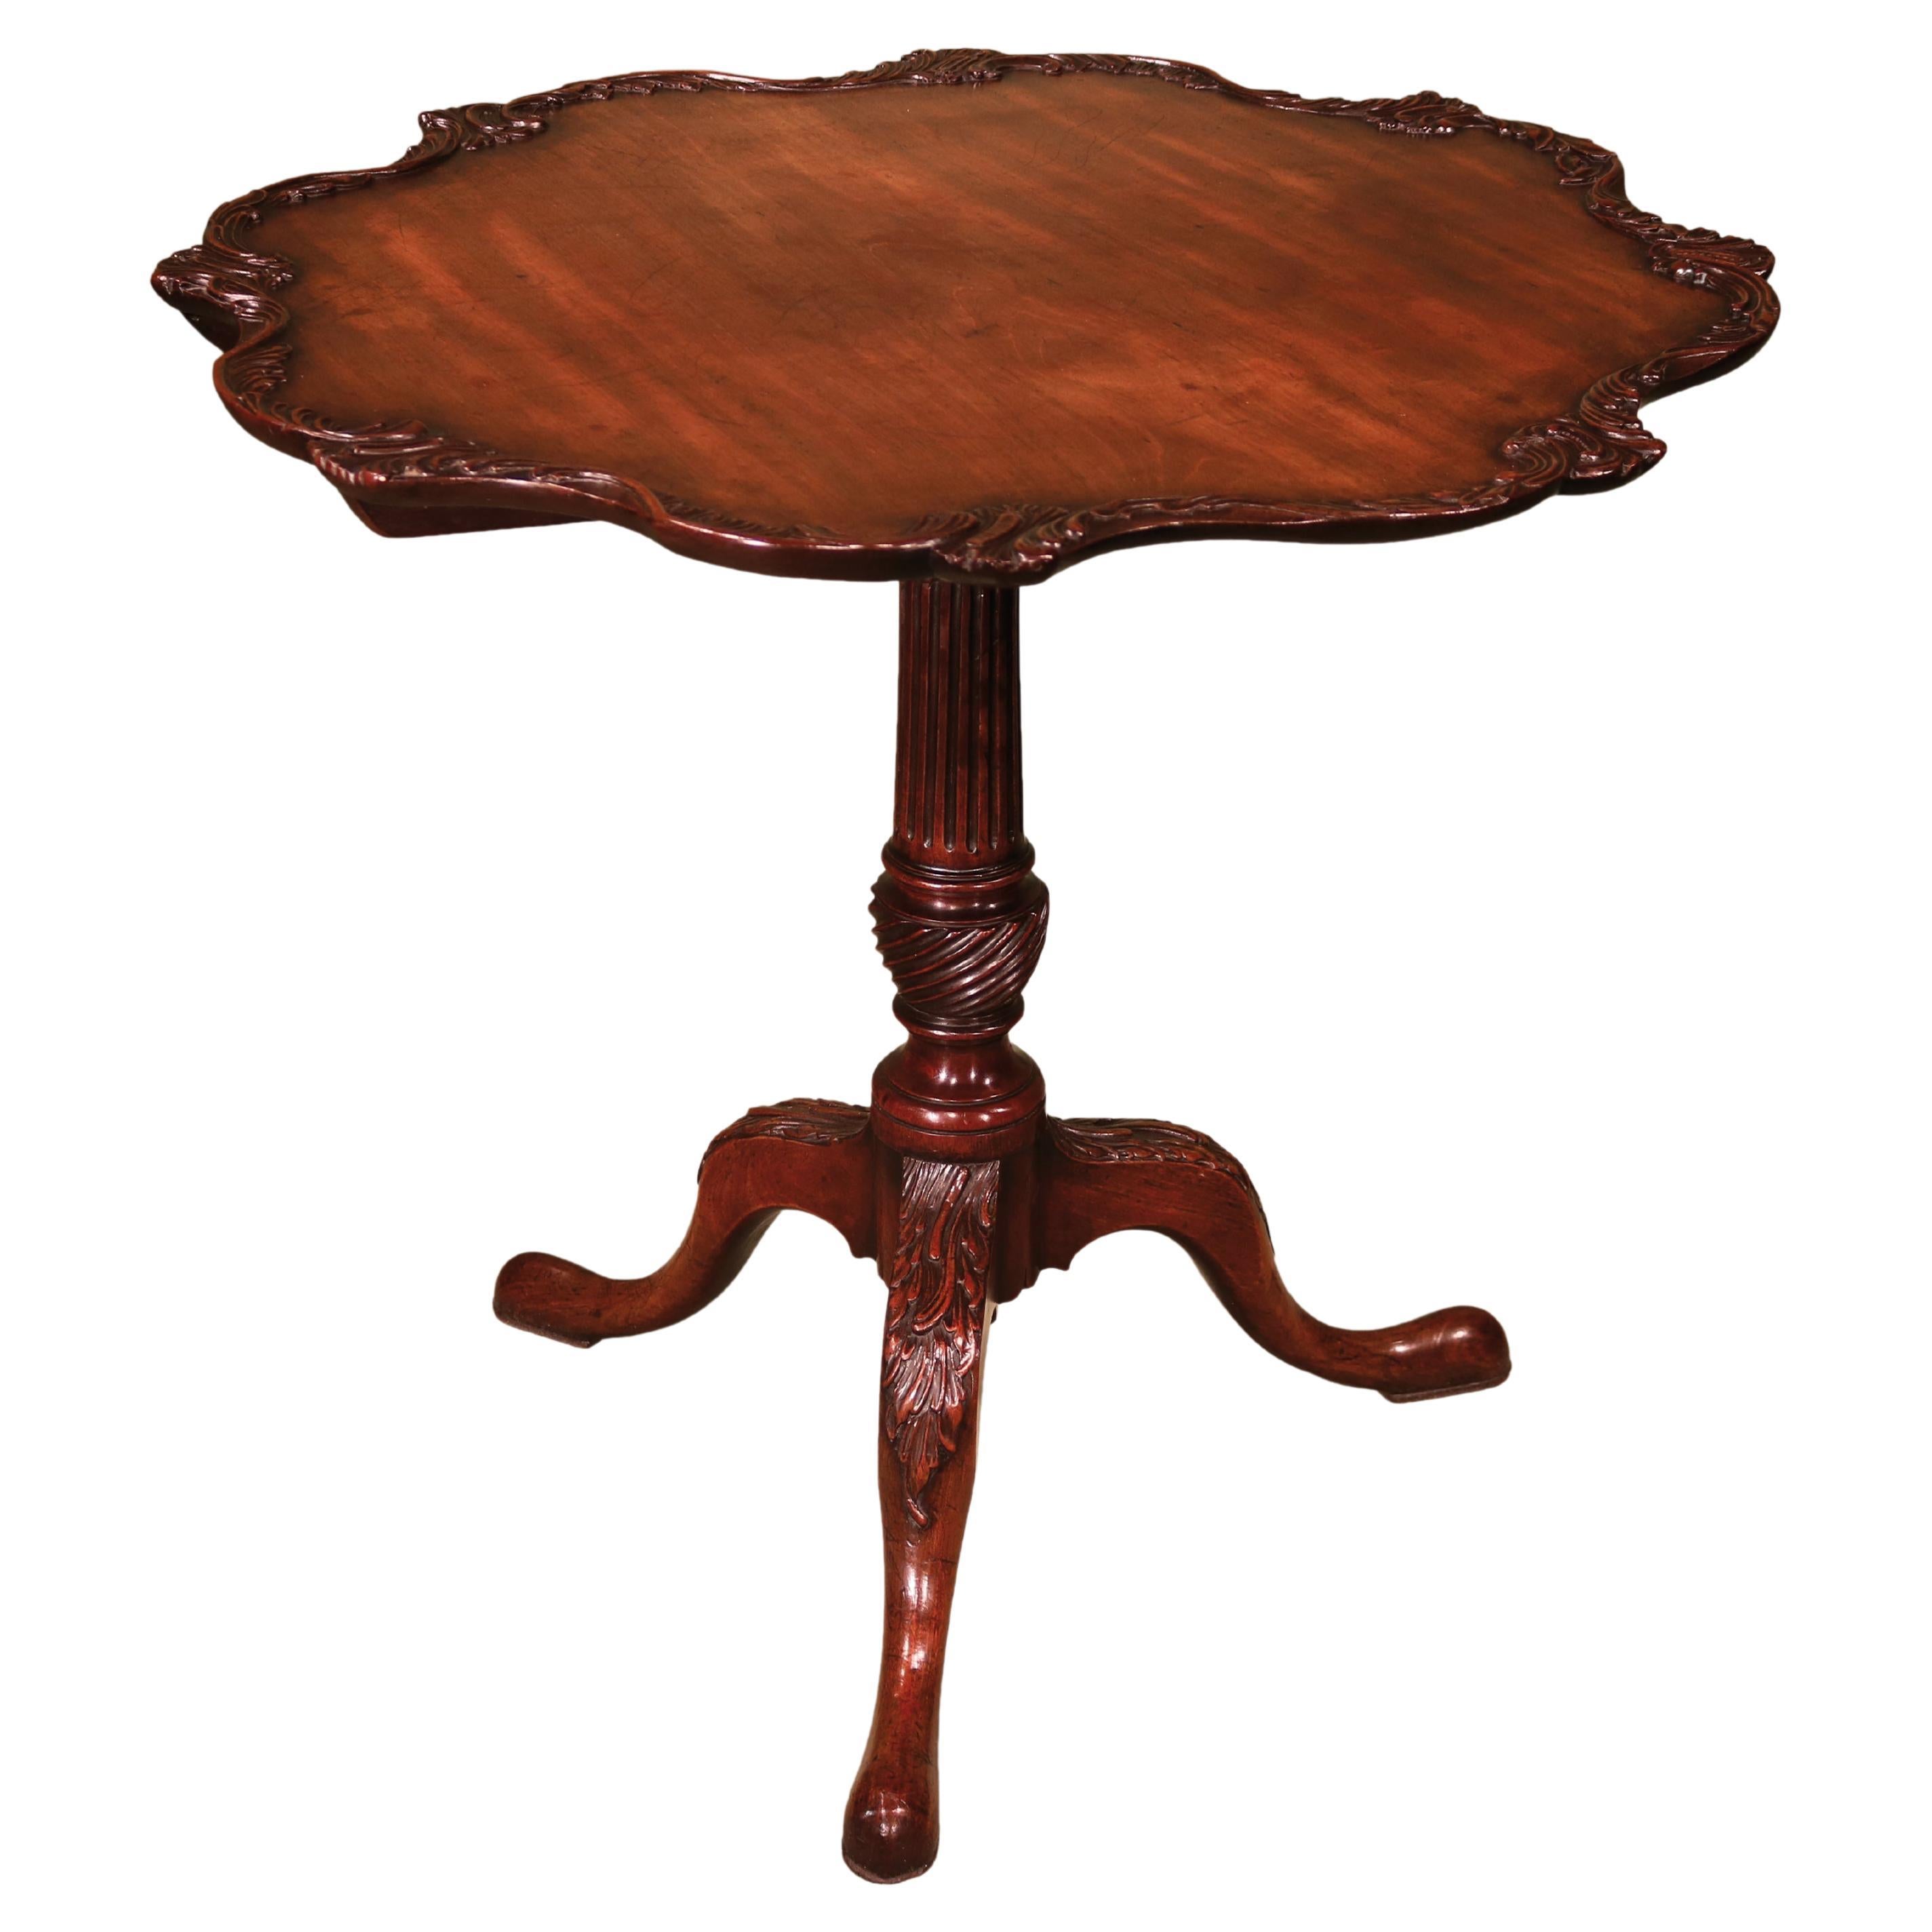 George III Period Carved Mahogany Tripod Table